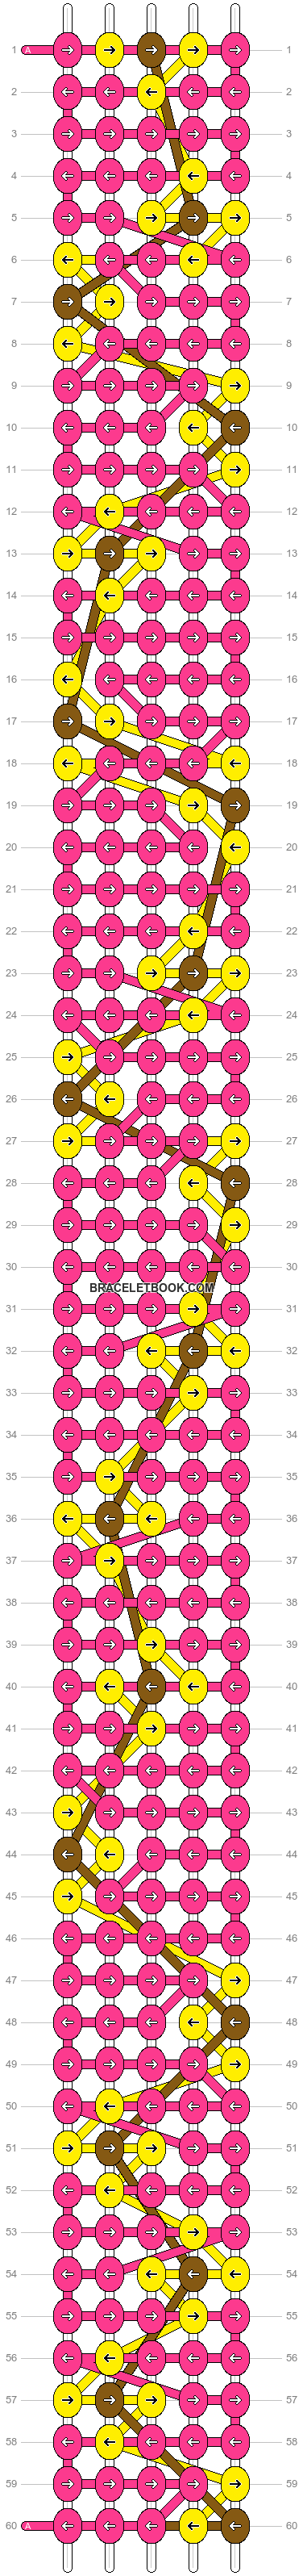 Alpha pattern #38852 variation #100301 pattern